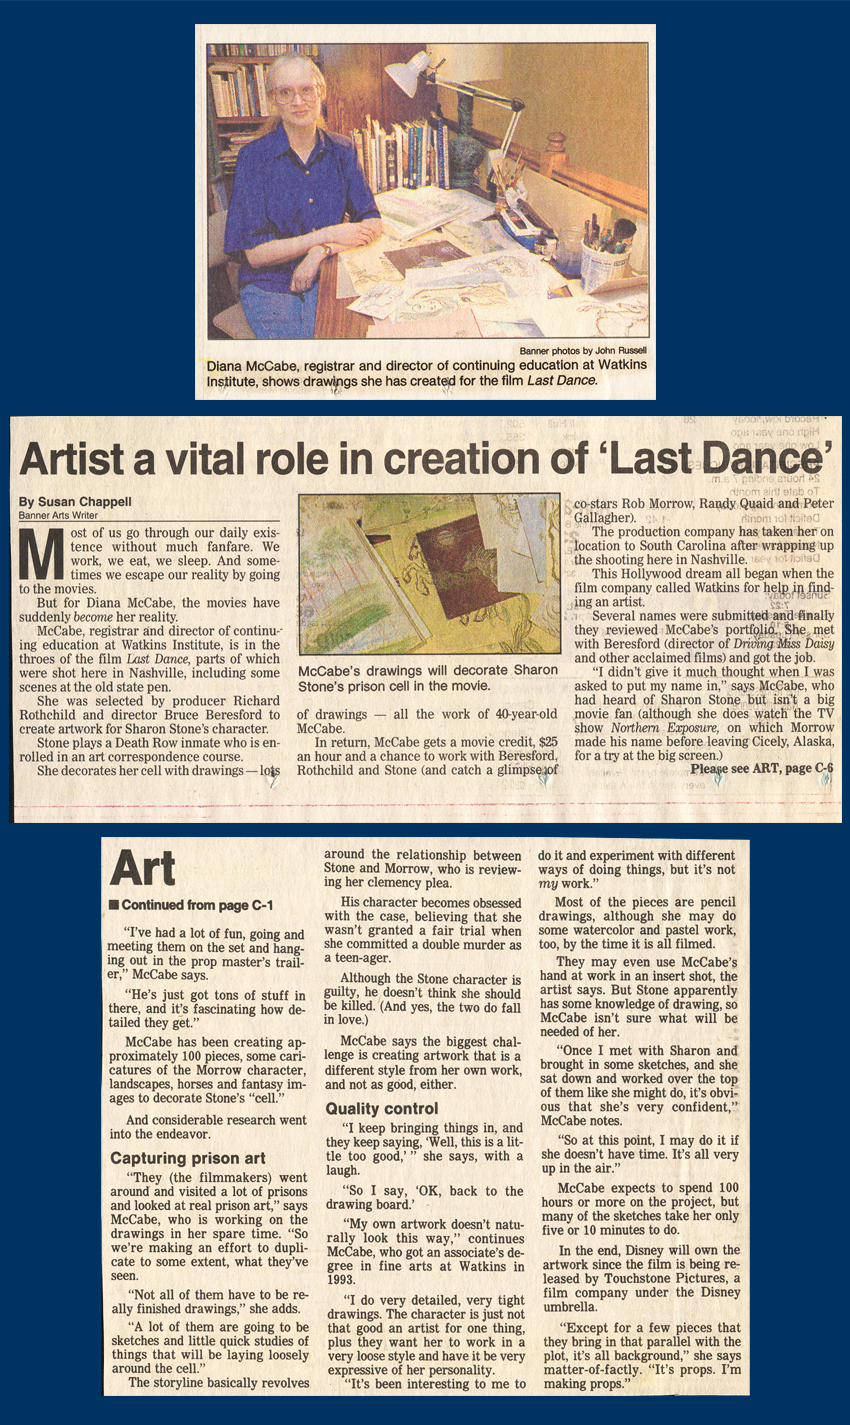 Last Dance Newspaper Article on Diana M. McCabe